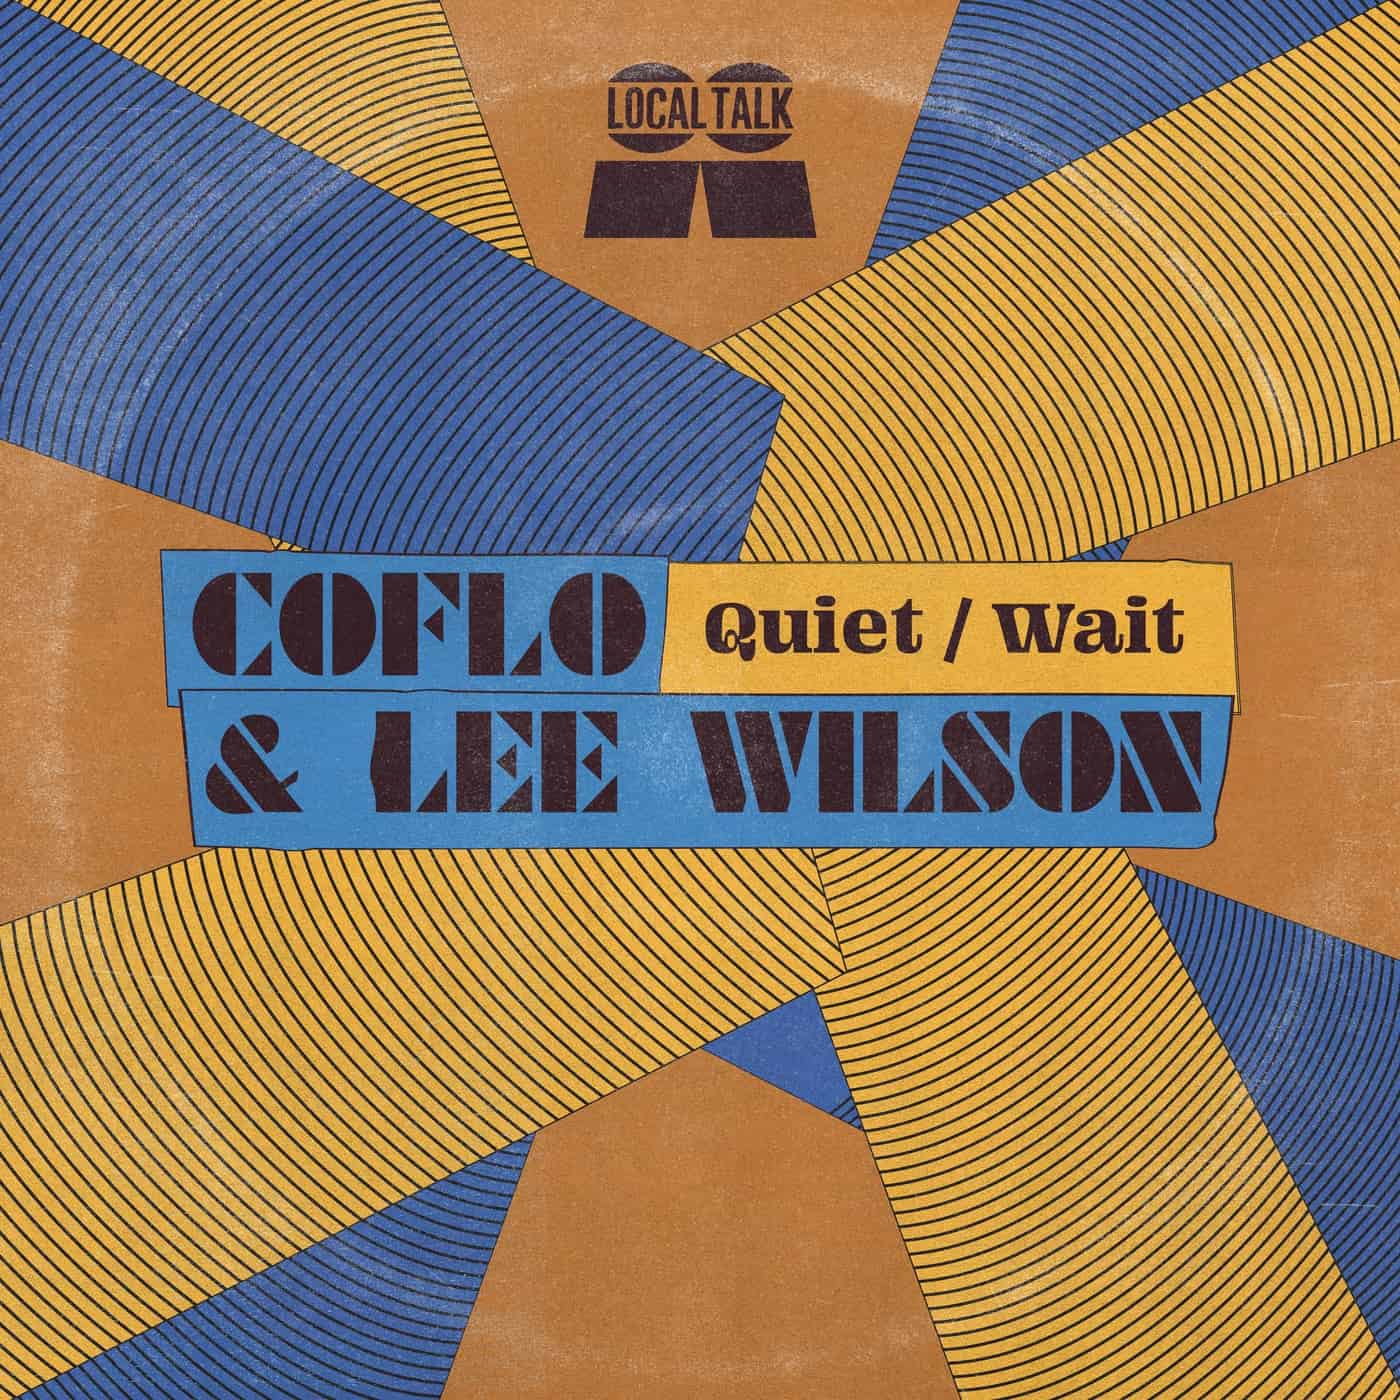 image cover: Lee Wilson, Coflo - Quiet / Wait / LT128